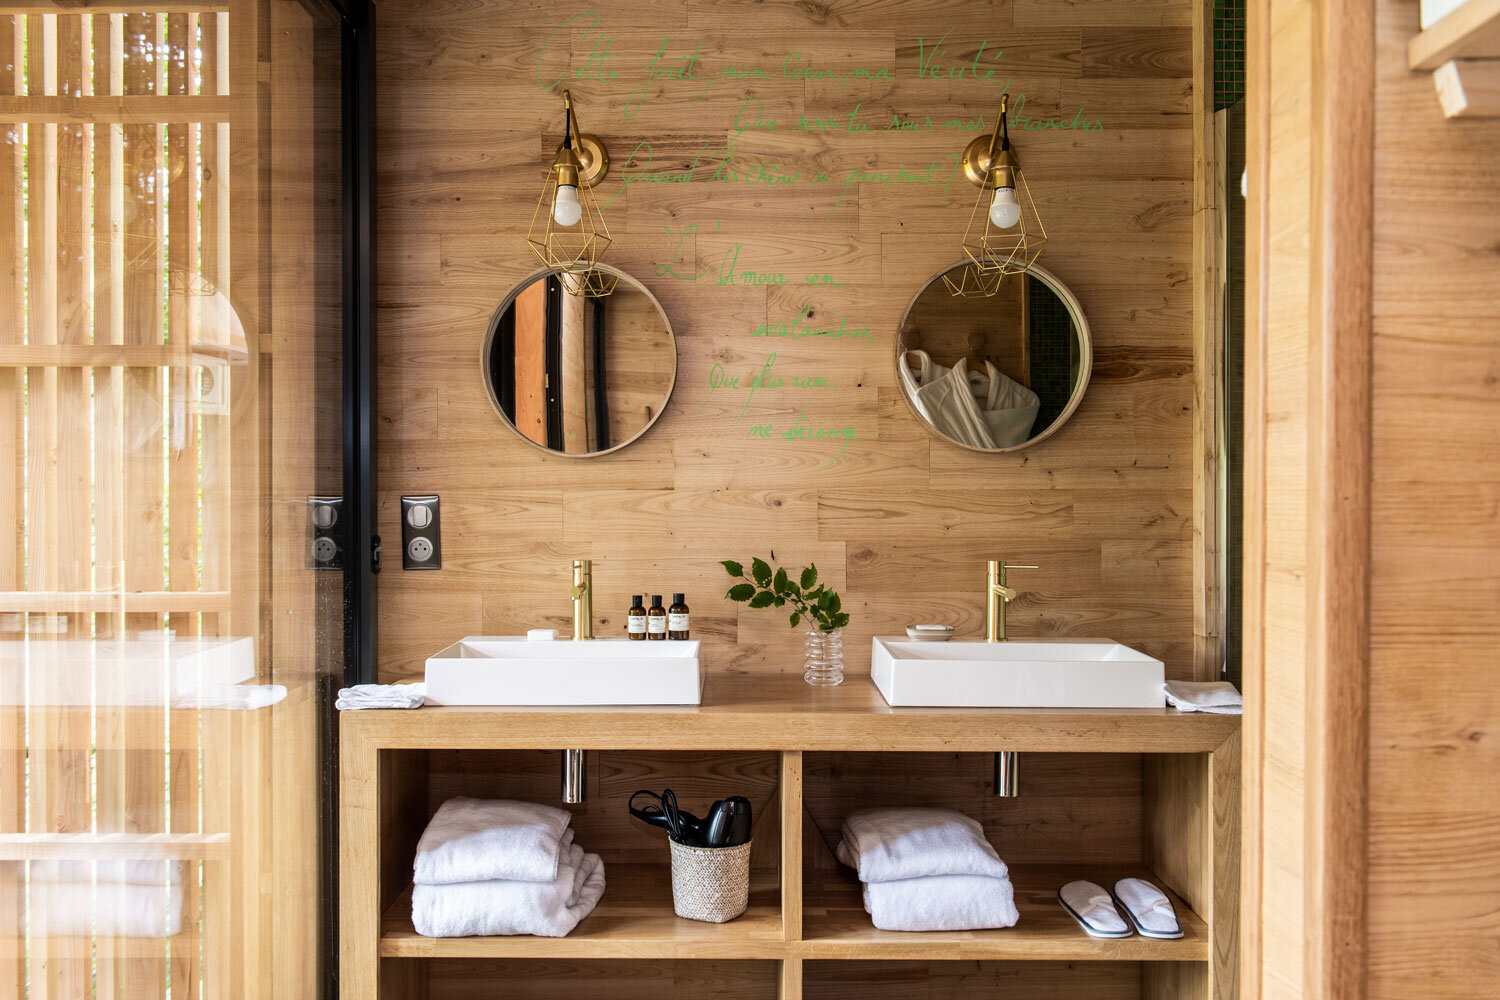 Loire-Valley-Lodges-Bathroom-Credit-Anne-Emmanuelle-Thion.jpg